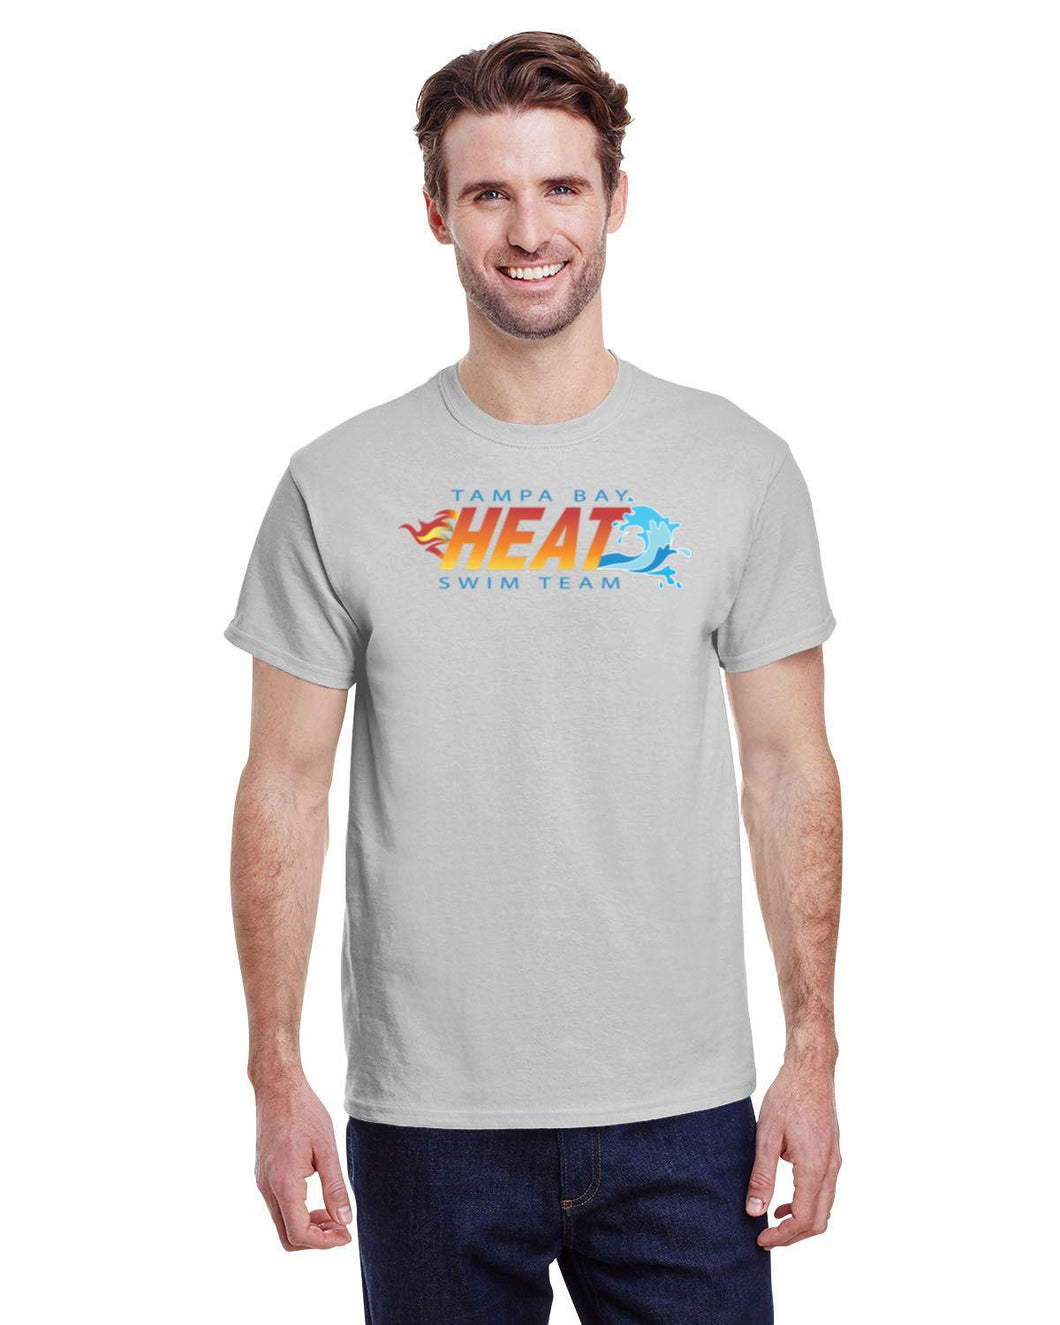 Tampa Bay Heat Swim Team - Adult Sizes